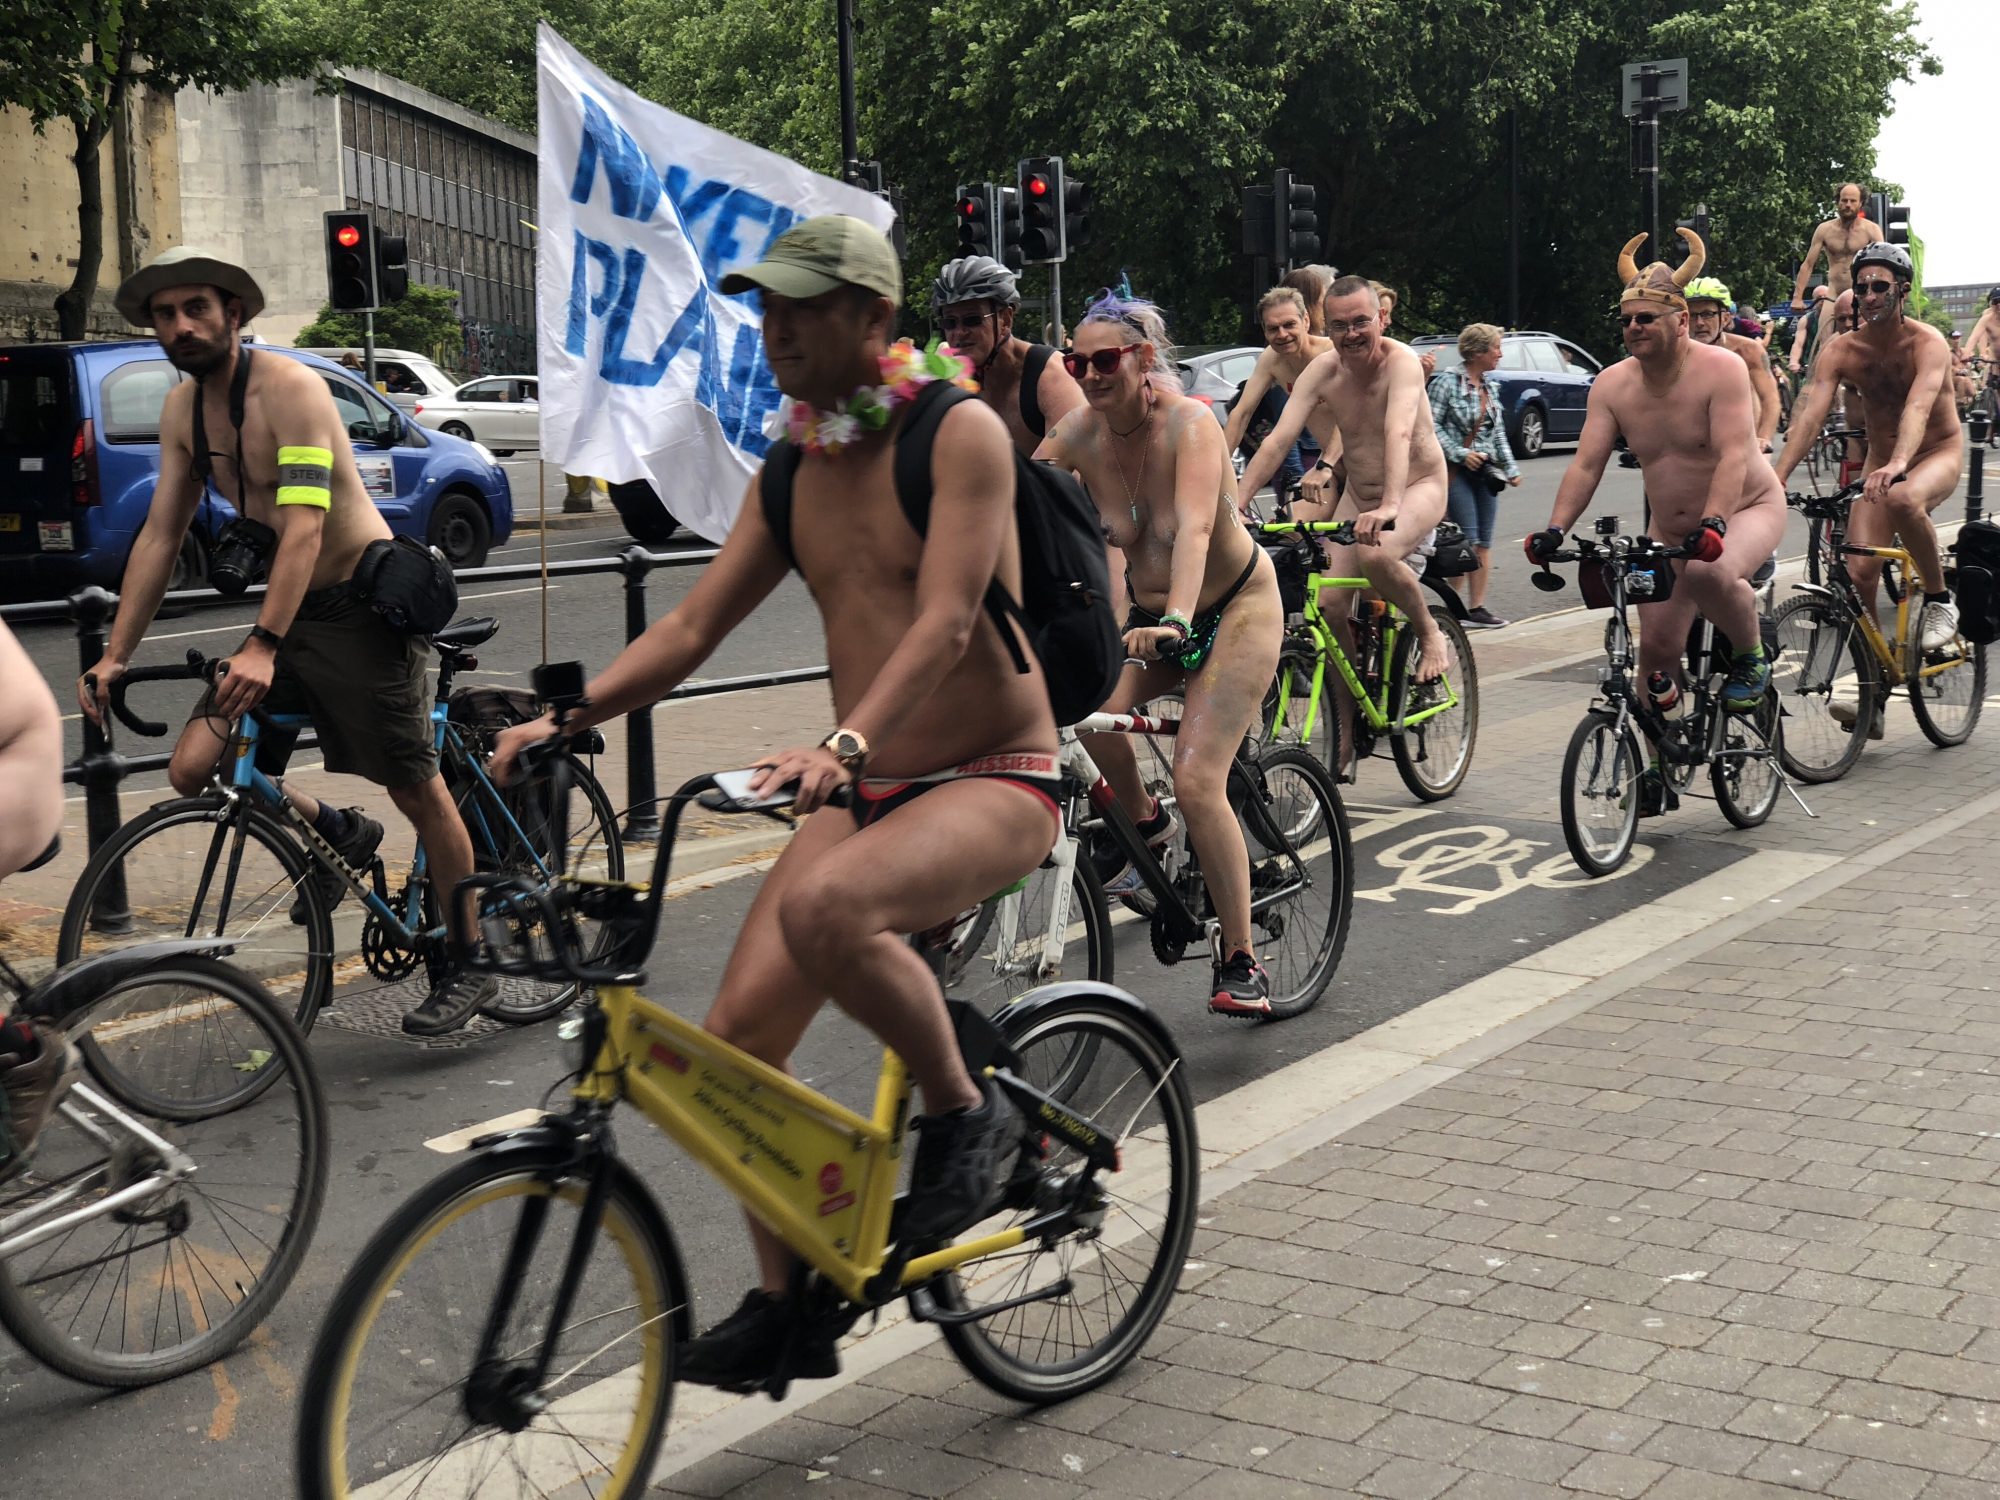 World Naked Bike Ride